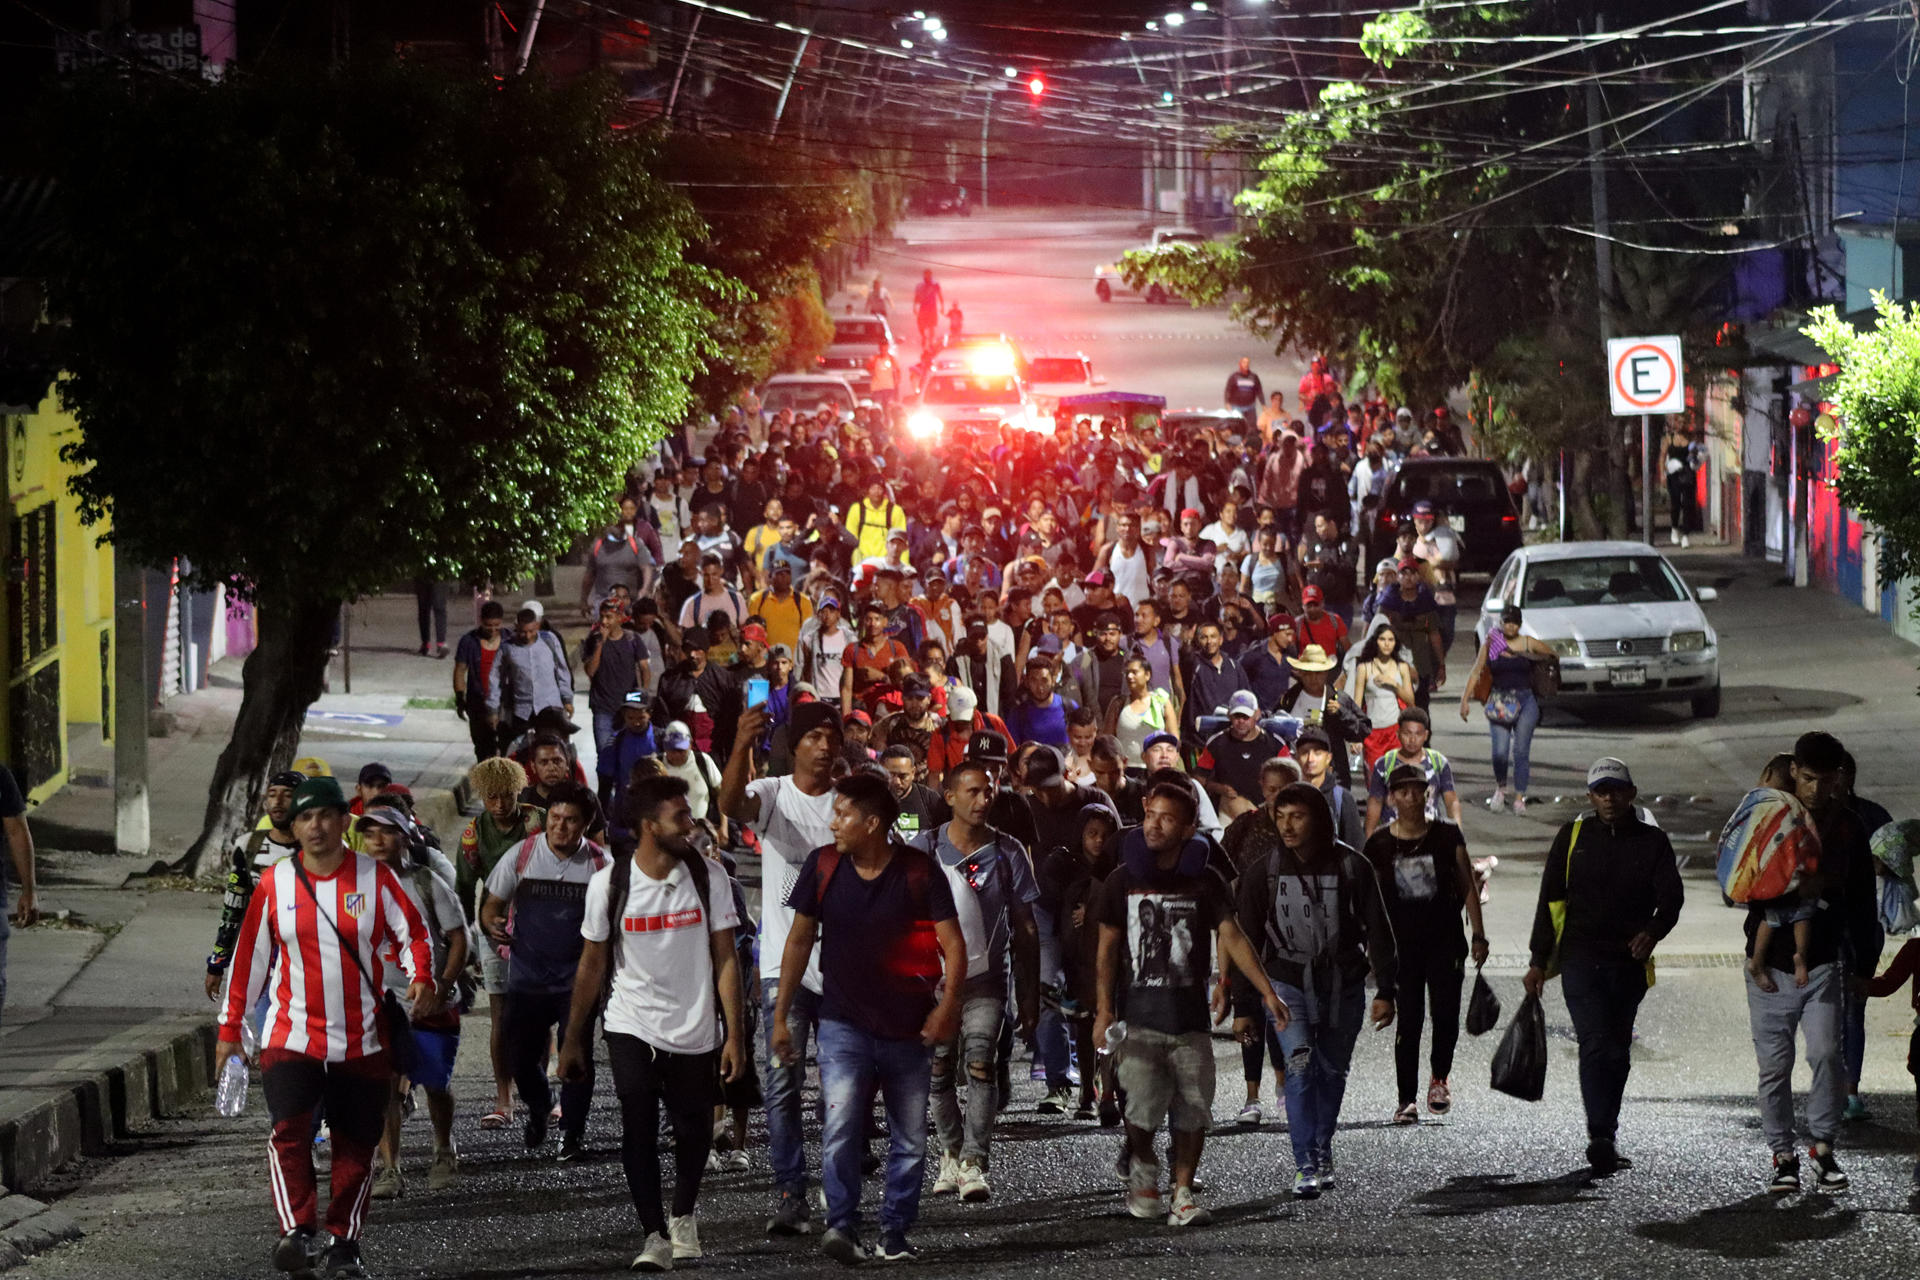 Caravana con unos 1,000 migrantes parte de México a Estados Unidos